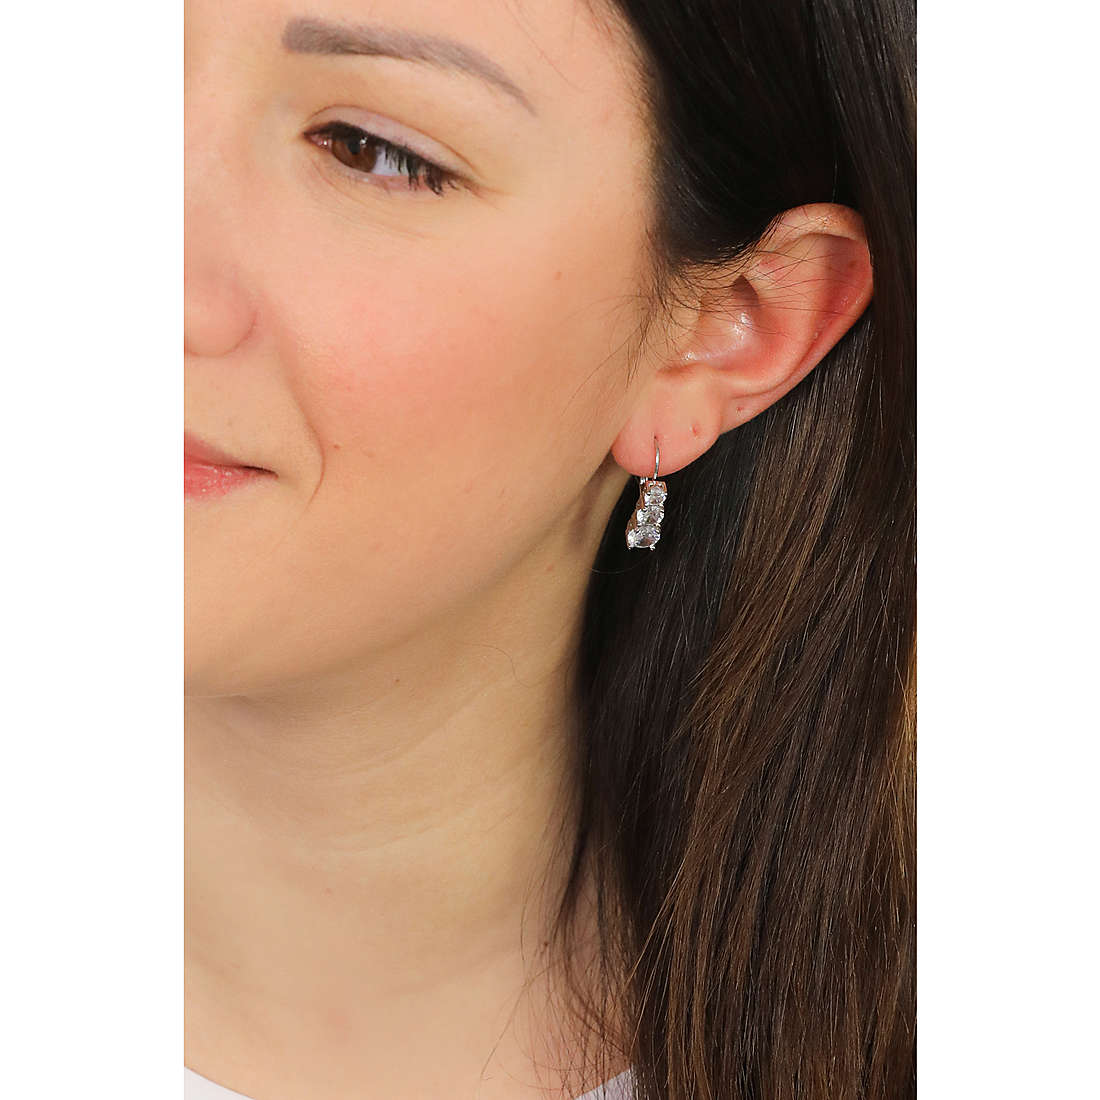 GioiaPura earrings woman INS028OR771RHWH photo wearing